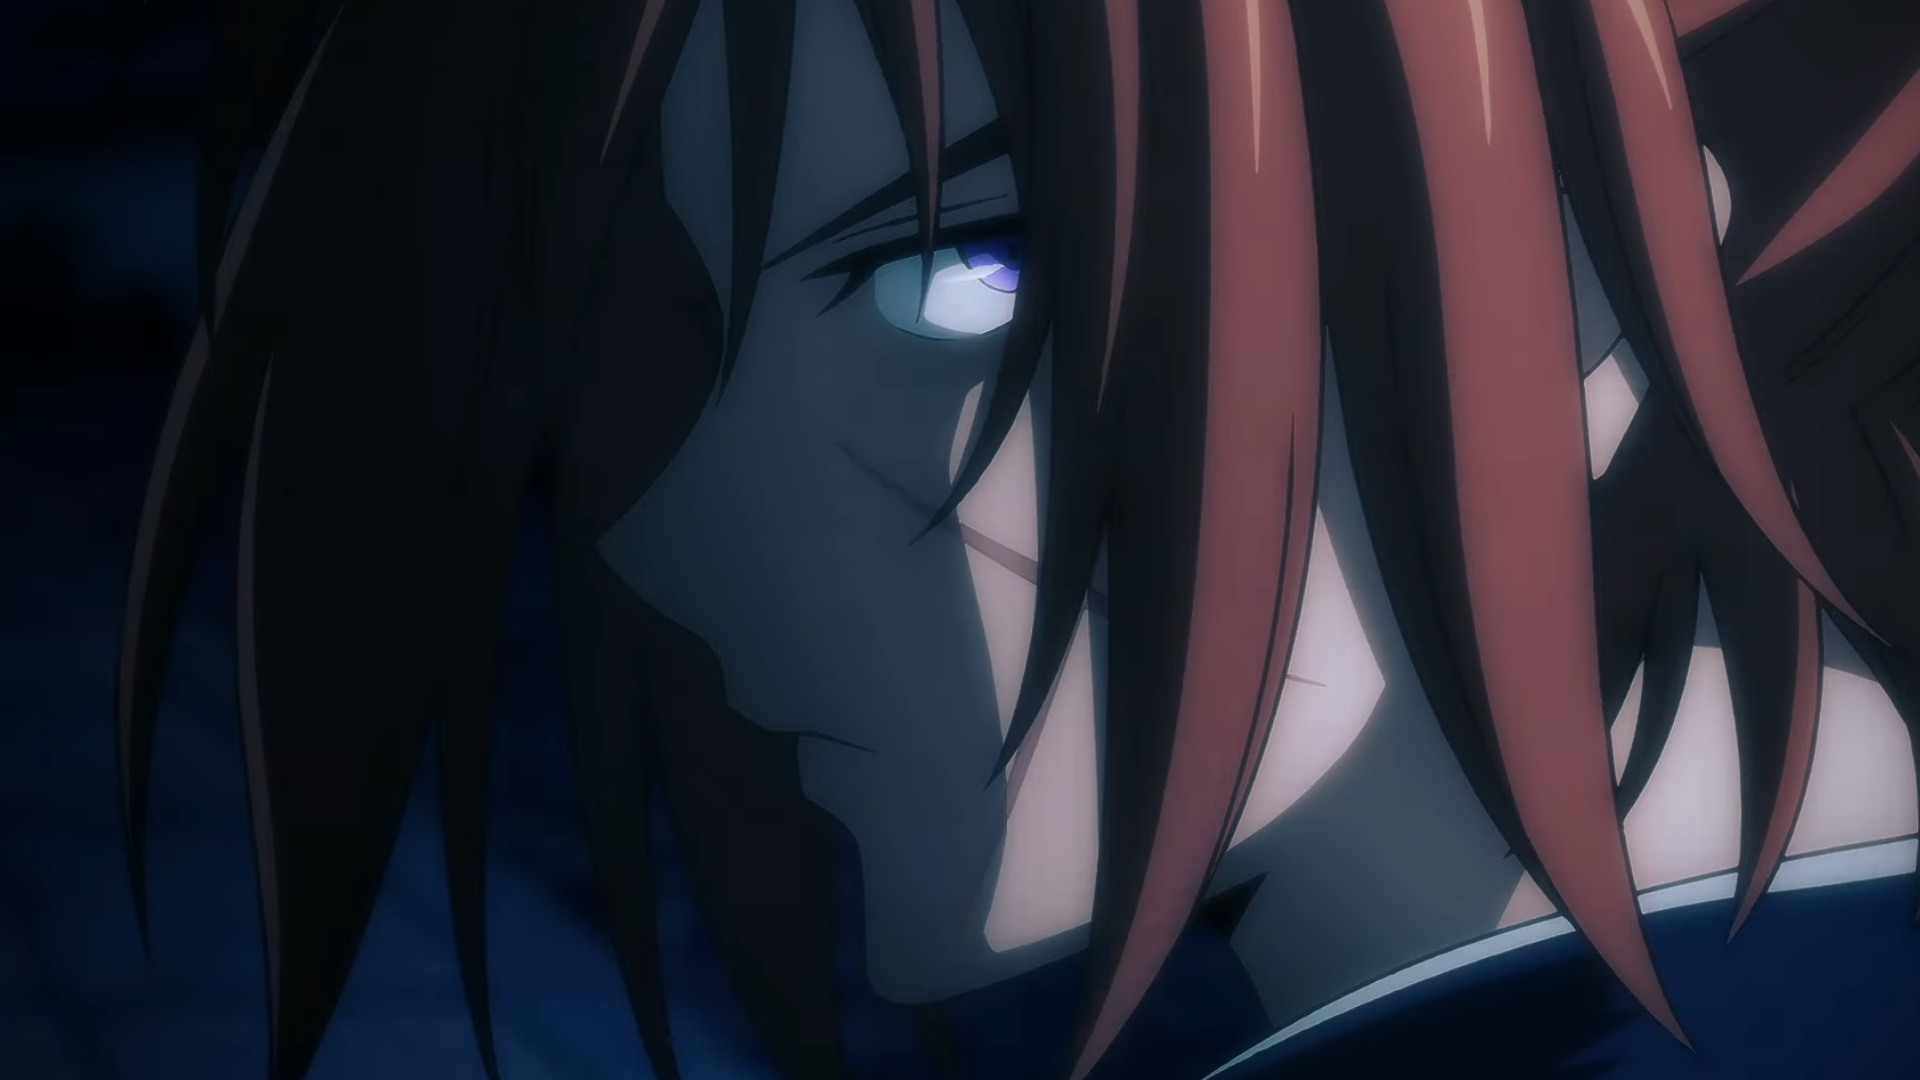 Rurouni Kenshin 2023 Reboot - How is it going so far? - Anime Ignite